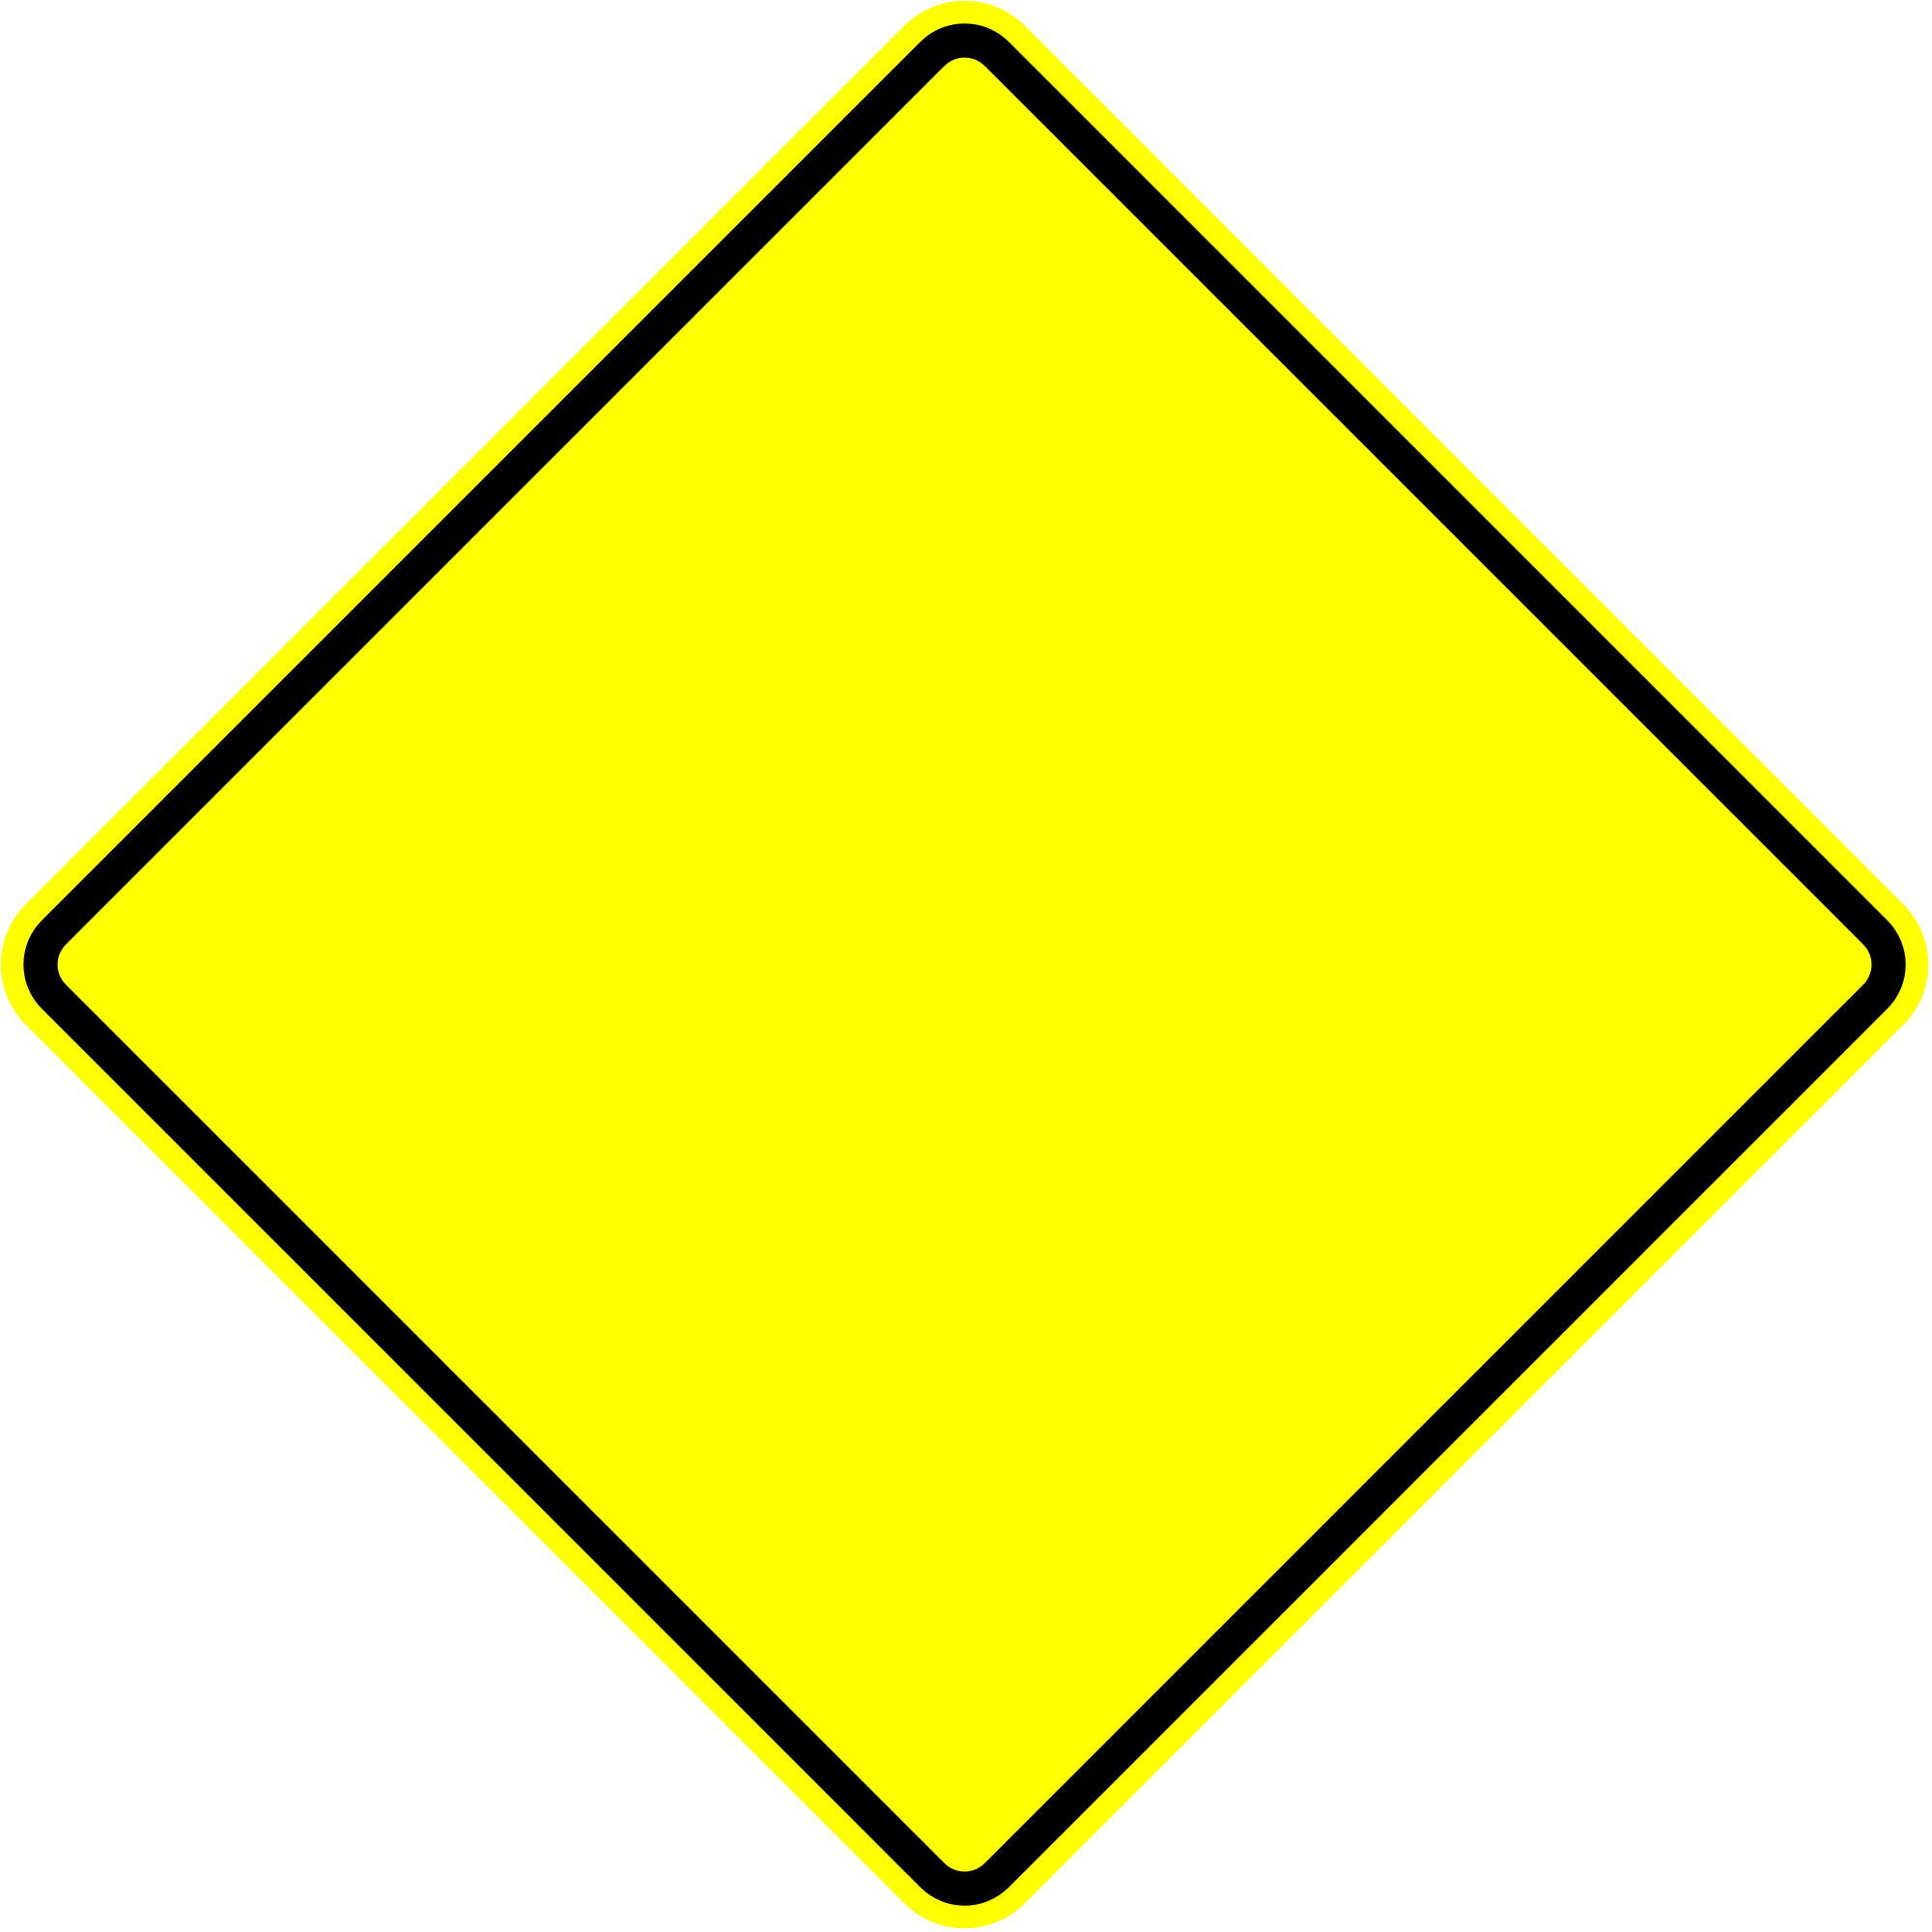 yellow traffic signs